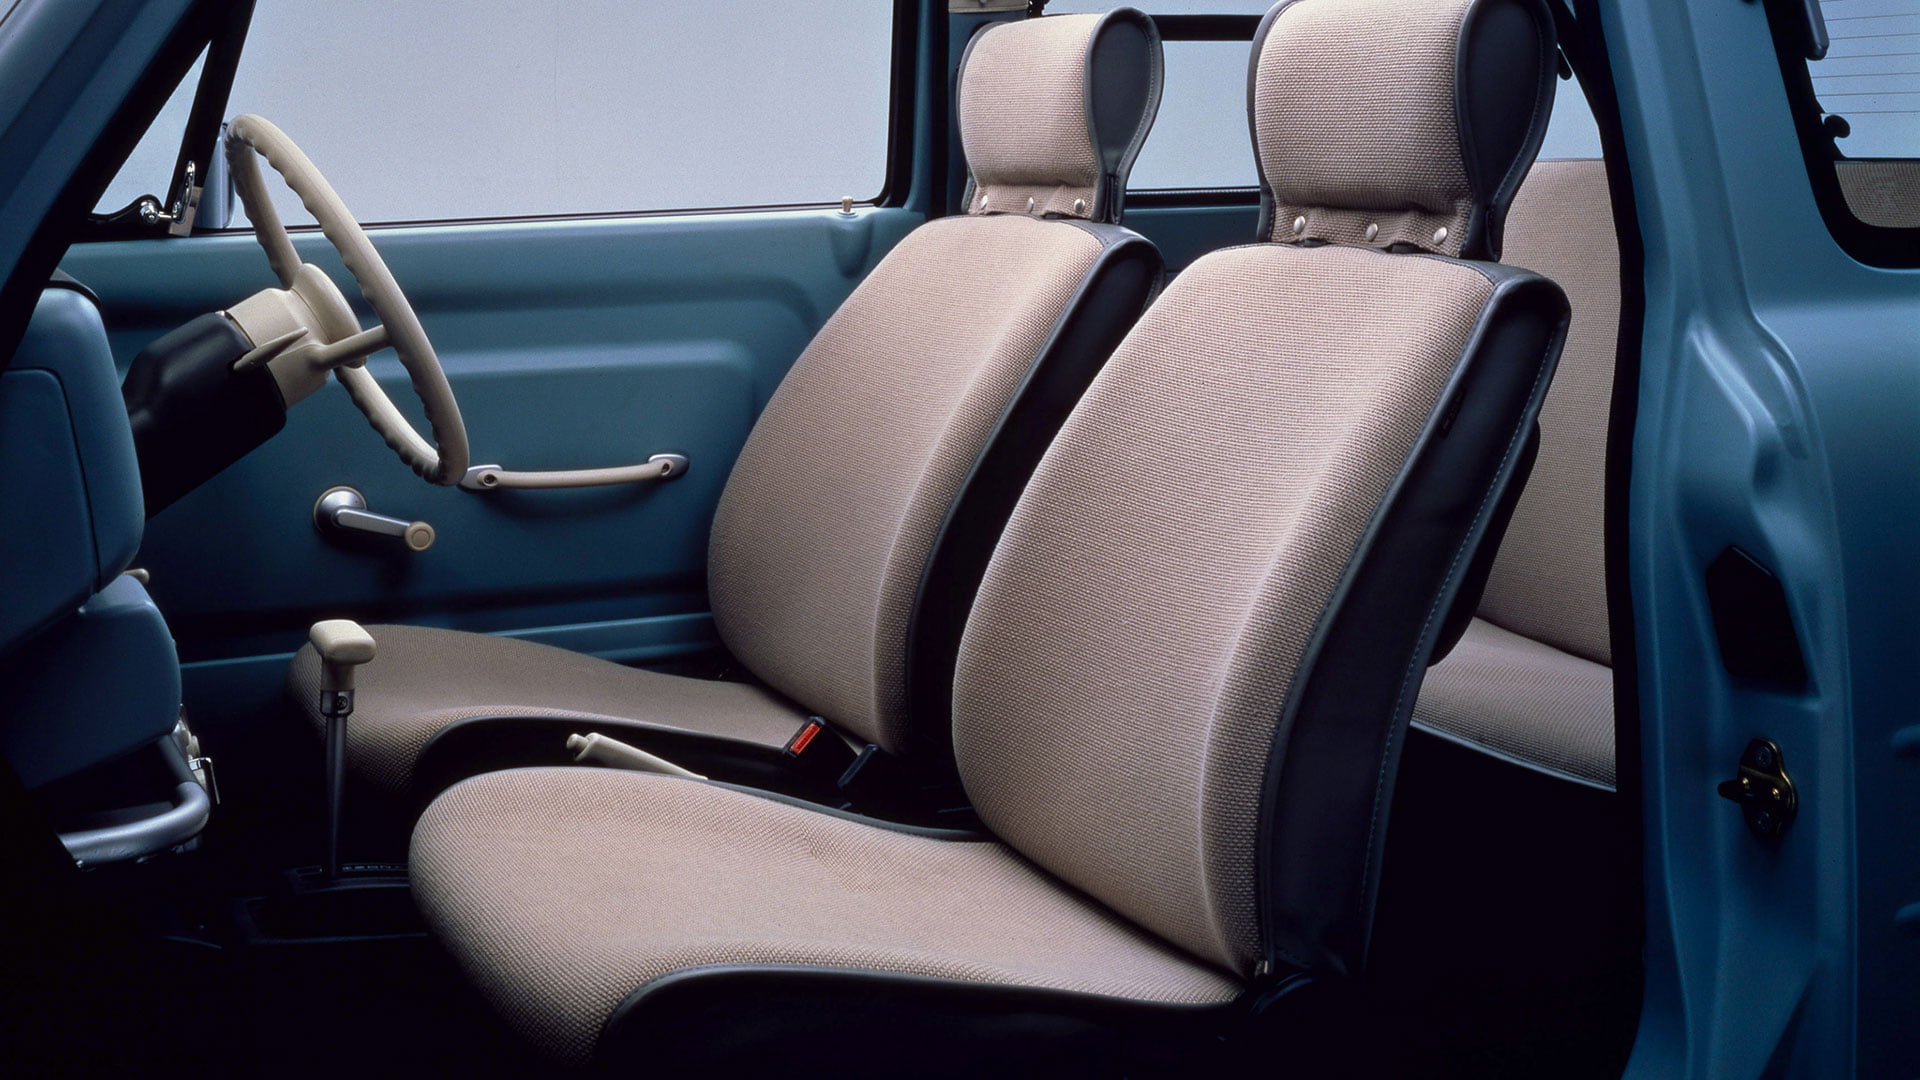 Nissan Pao seats